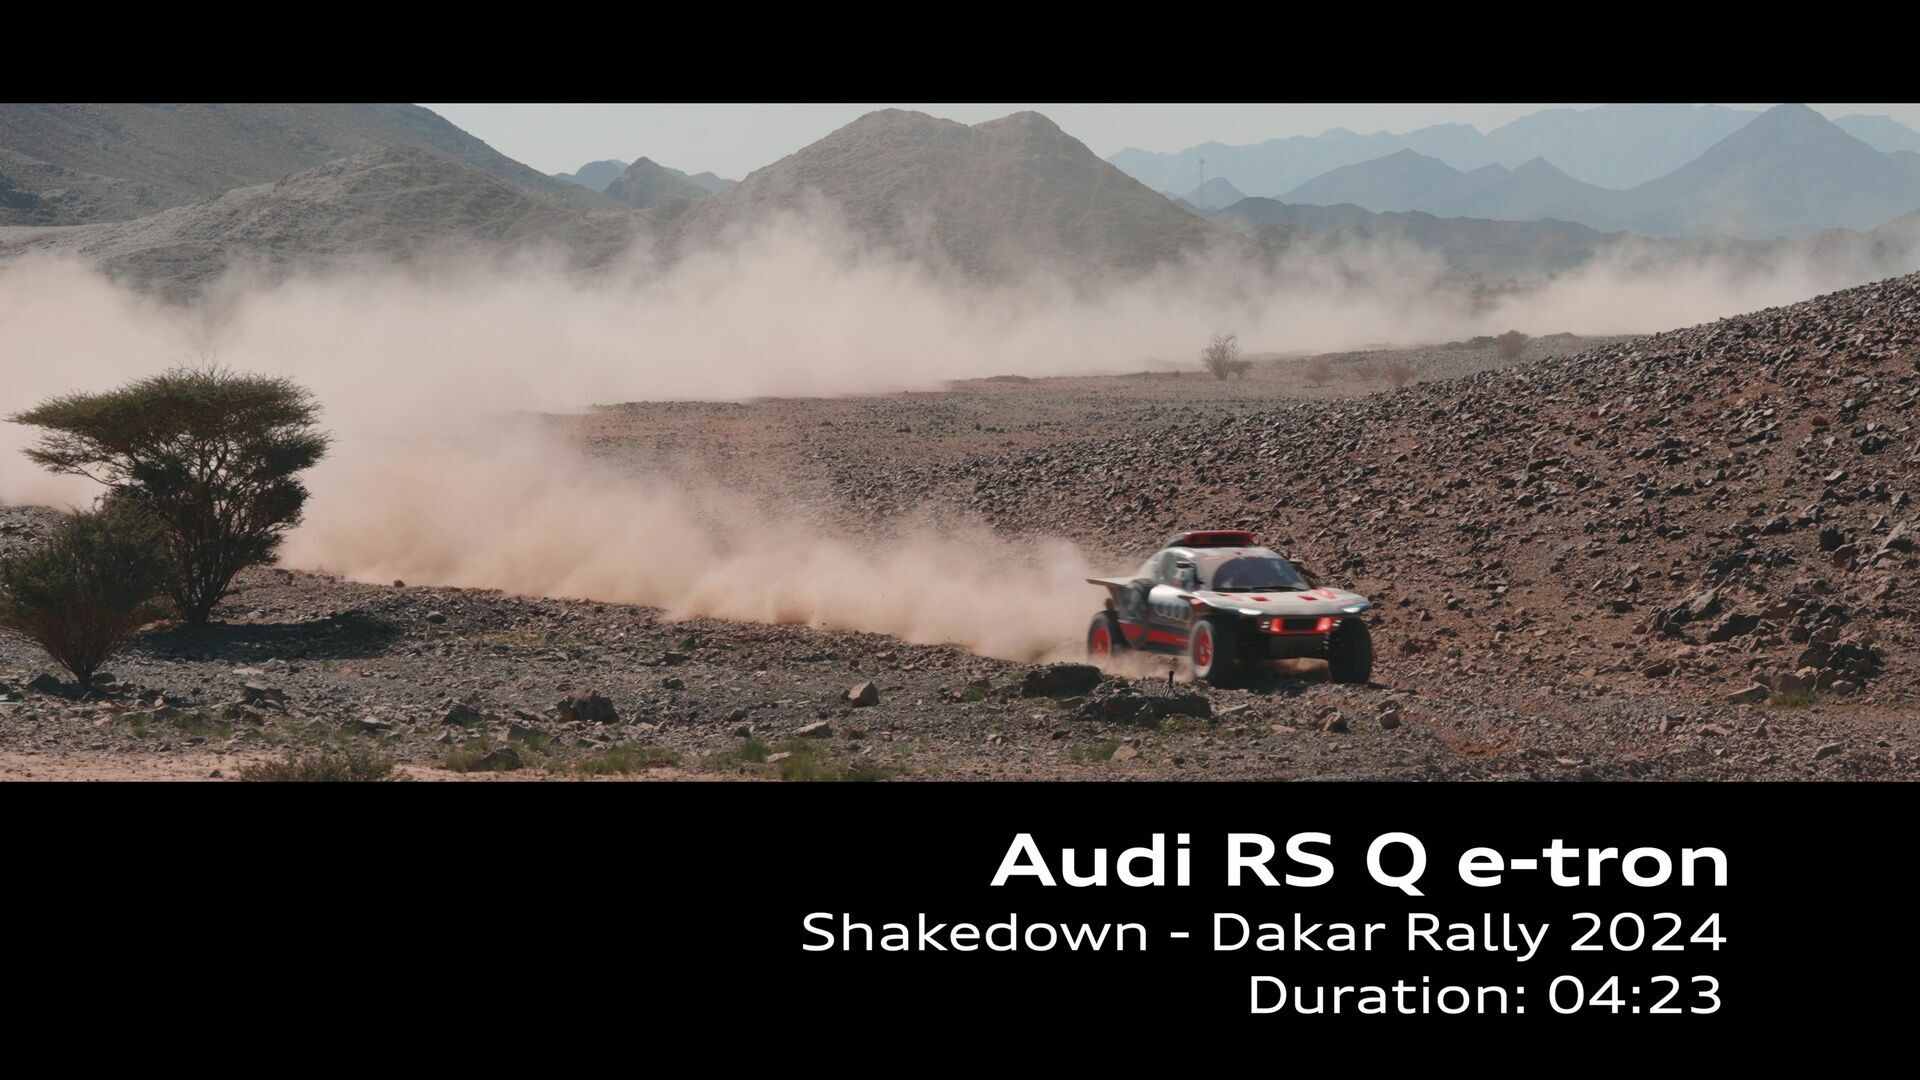 Footage: Shakedown – Dakar Rally 2024